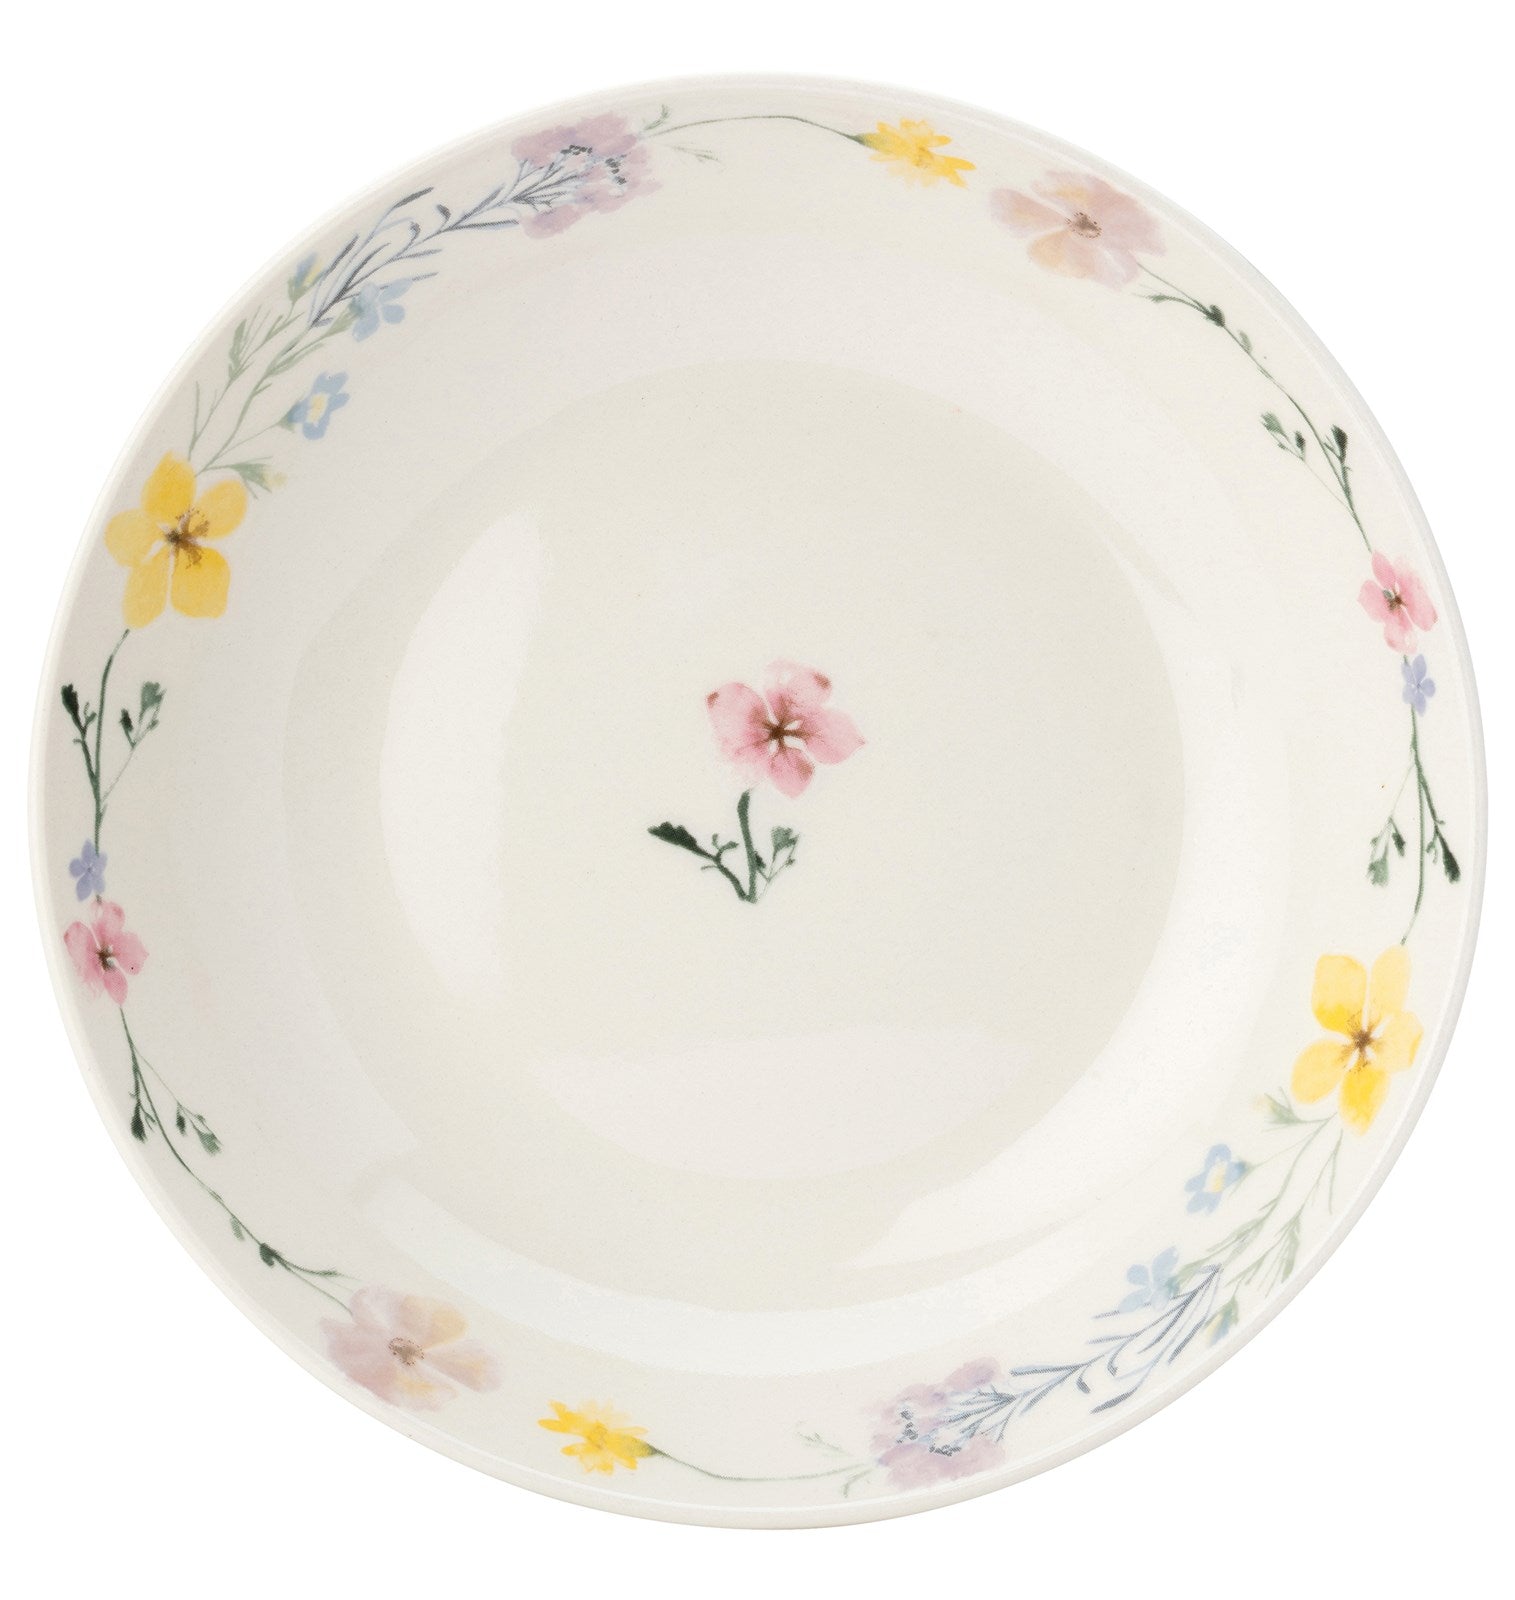 The English Tableware Company Pressed Flowers Bowl